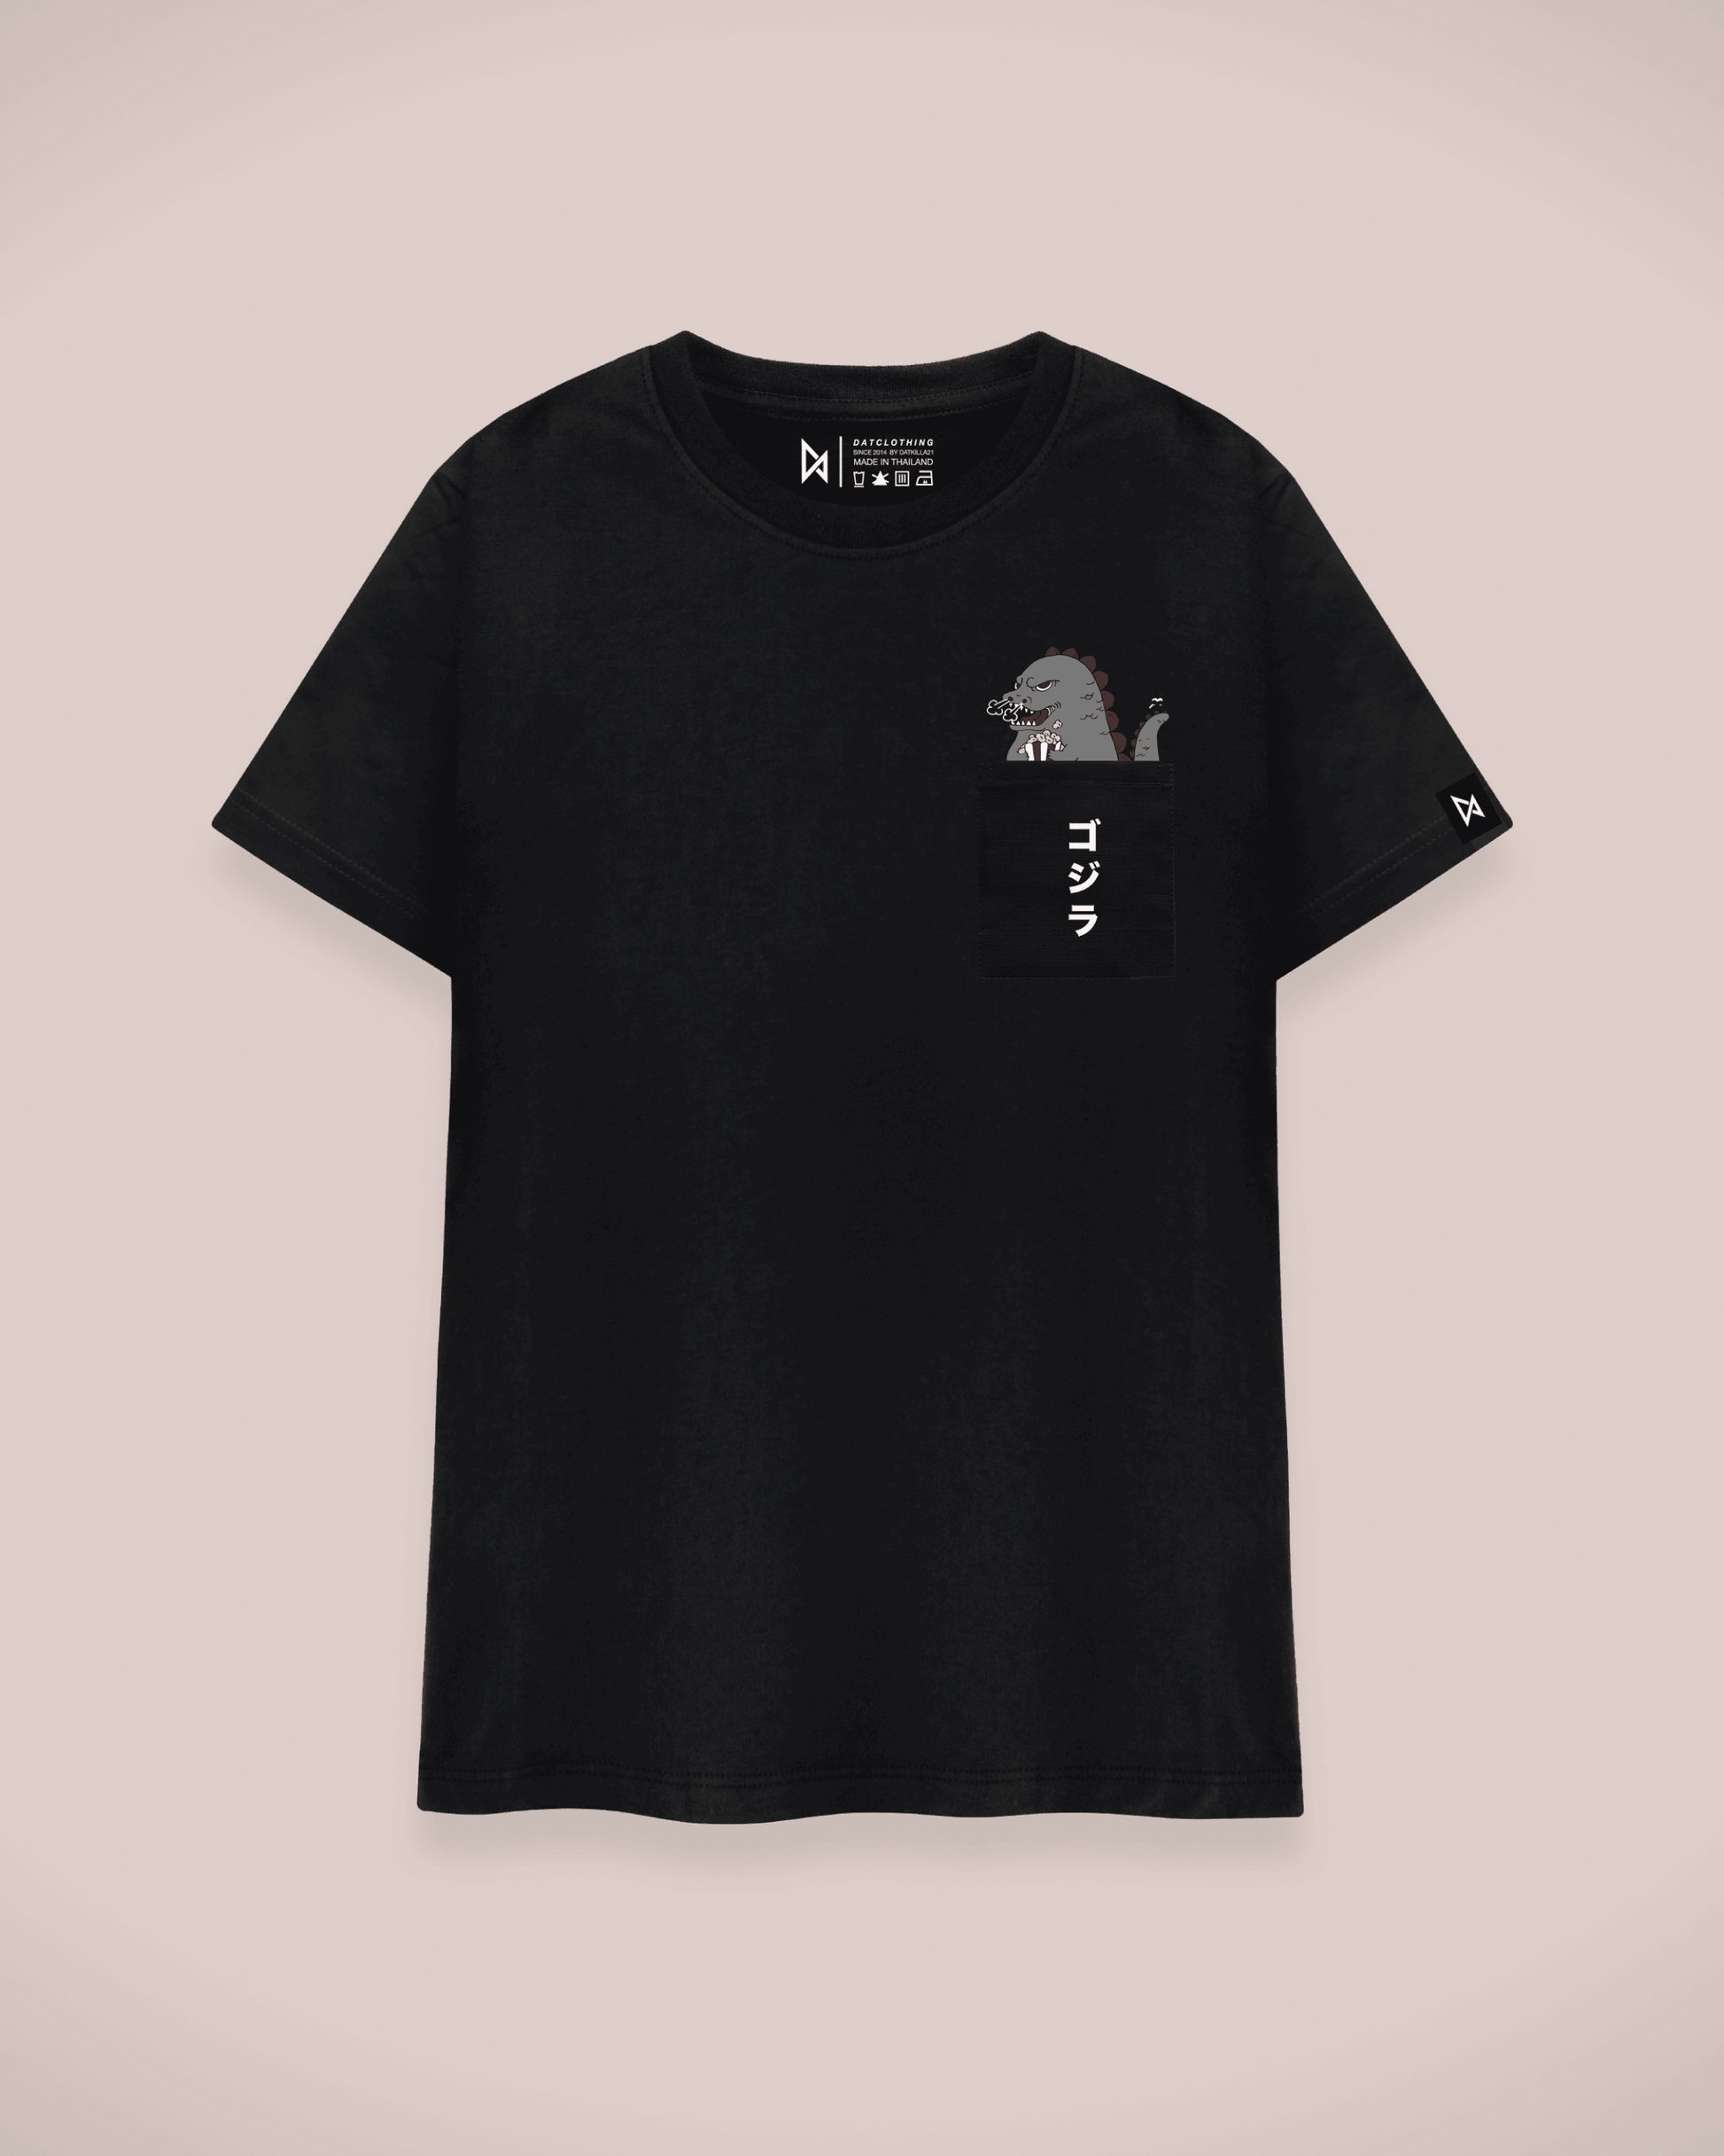 Datclothing - Black T-Shirt with Godzilla eating popcorn print and pocket